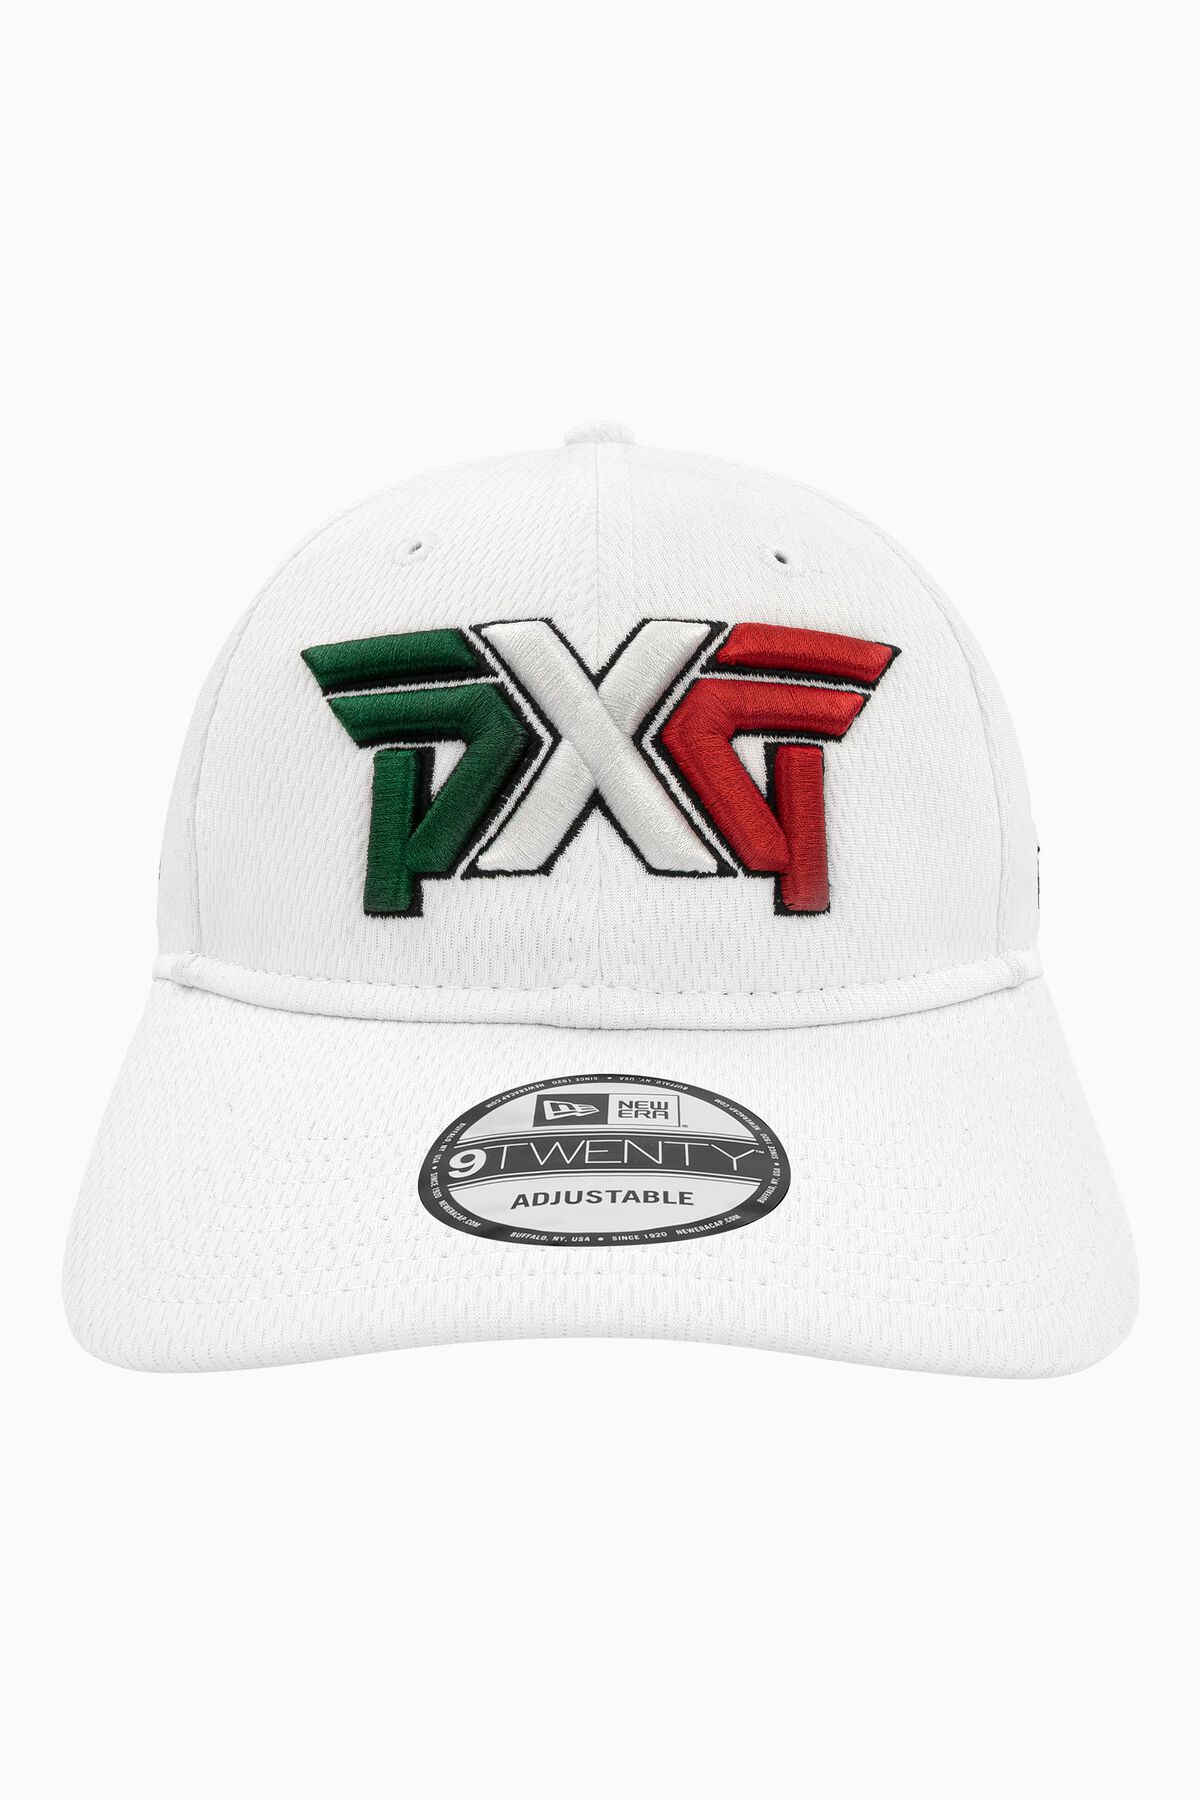 Mexico Flag 9TWENTY Adjustable Cap 